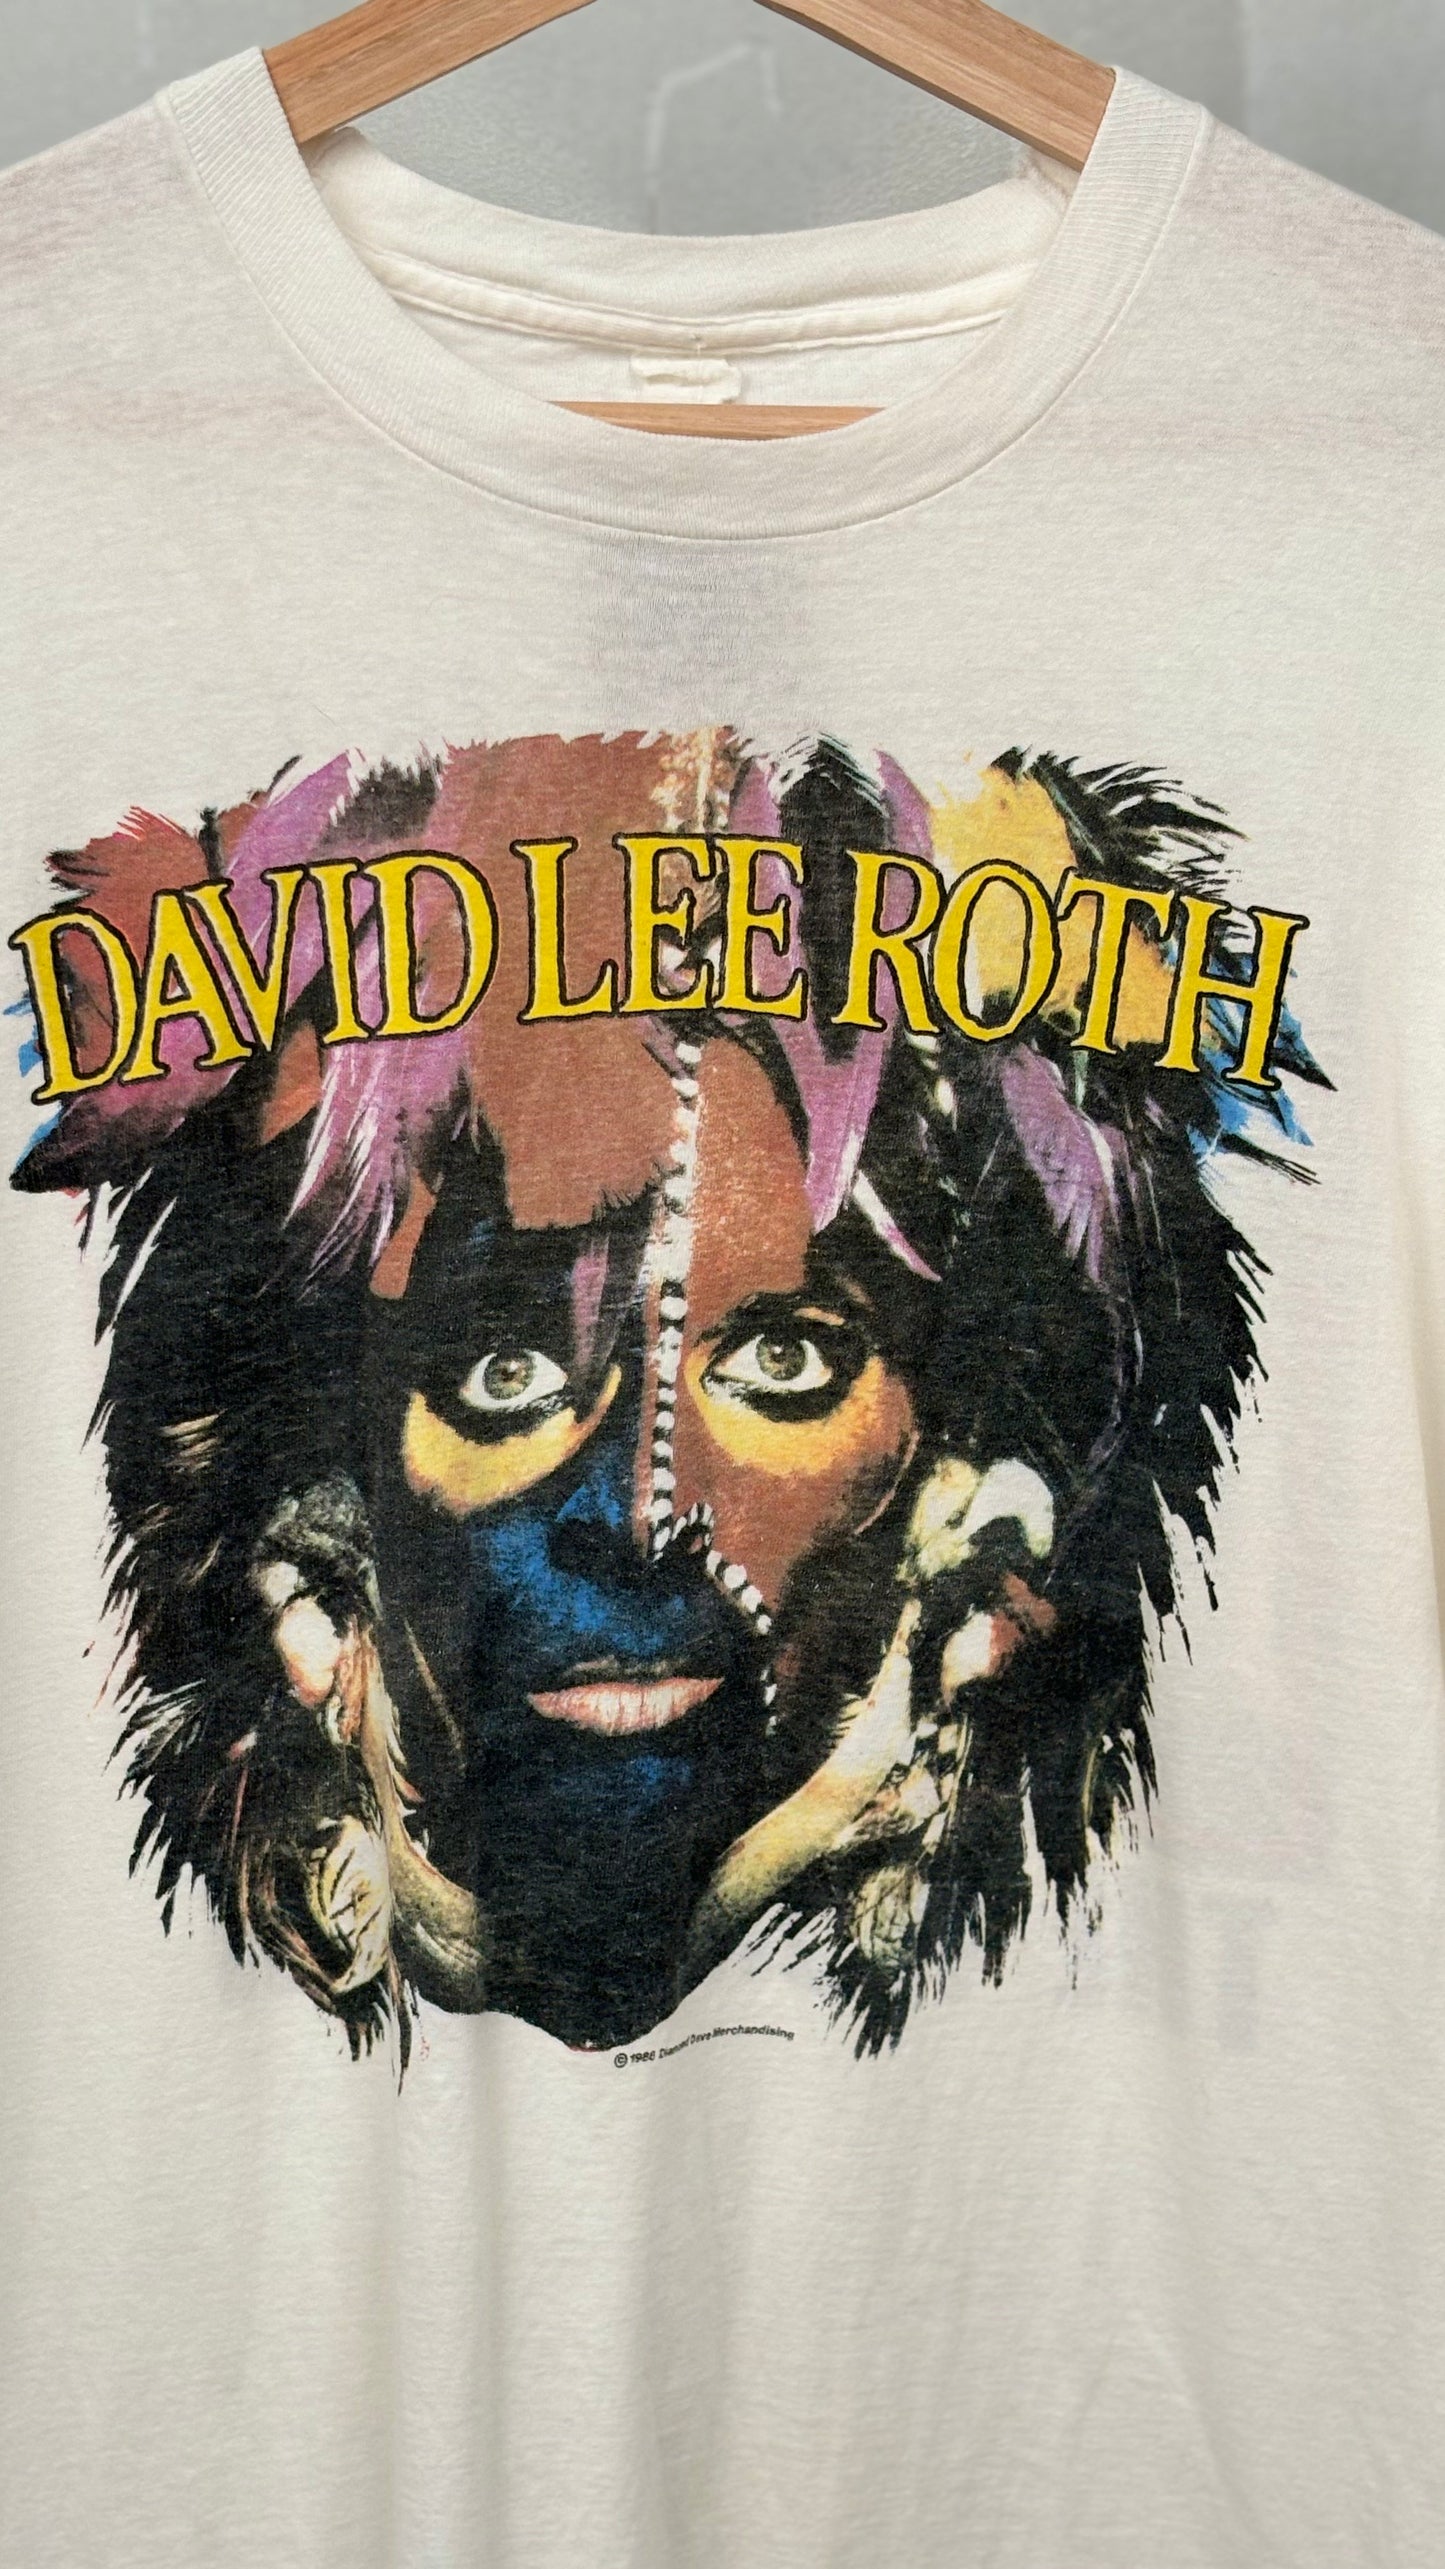 1986 David Lee Roth World Tour T-Shirt